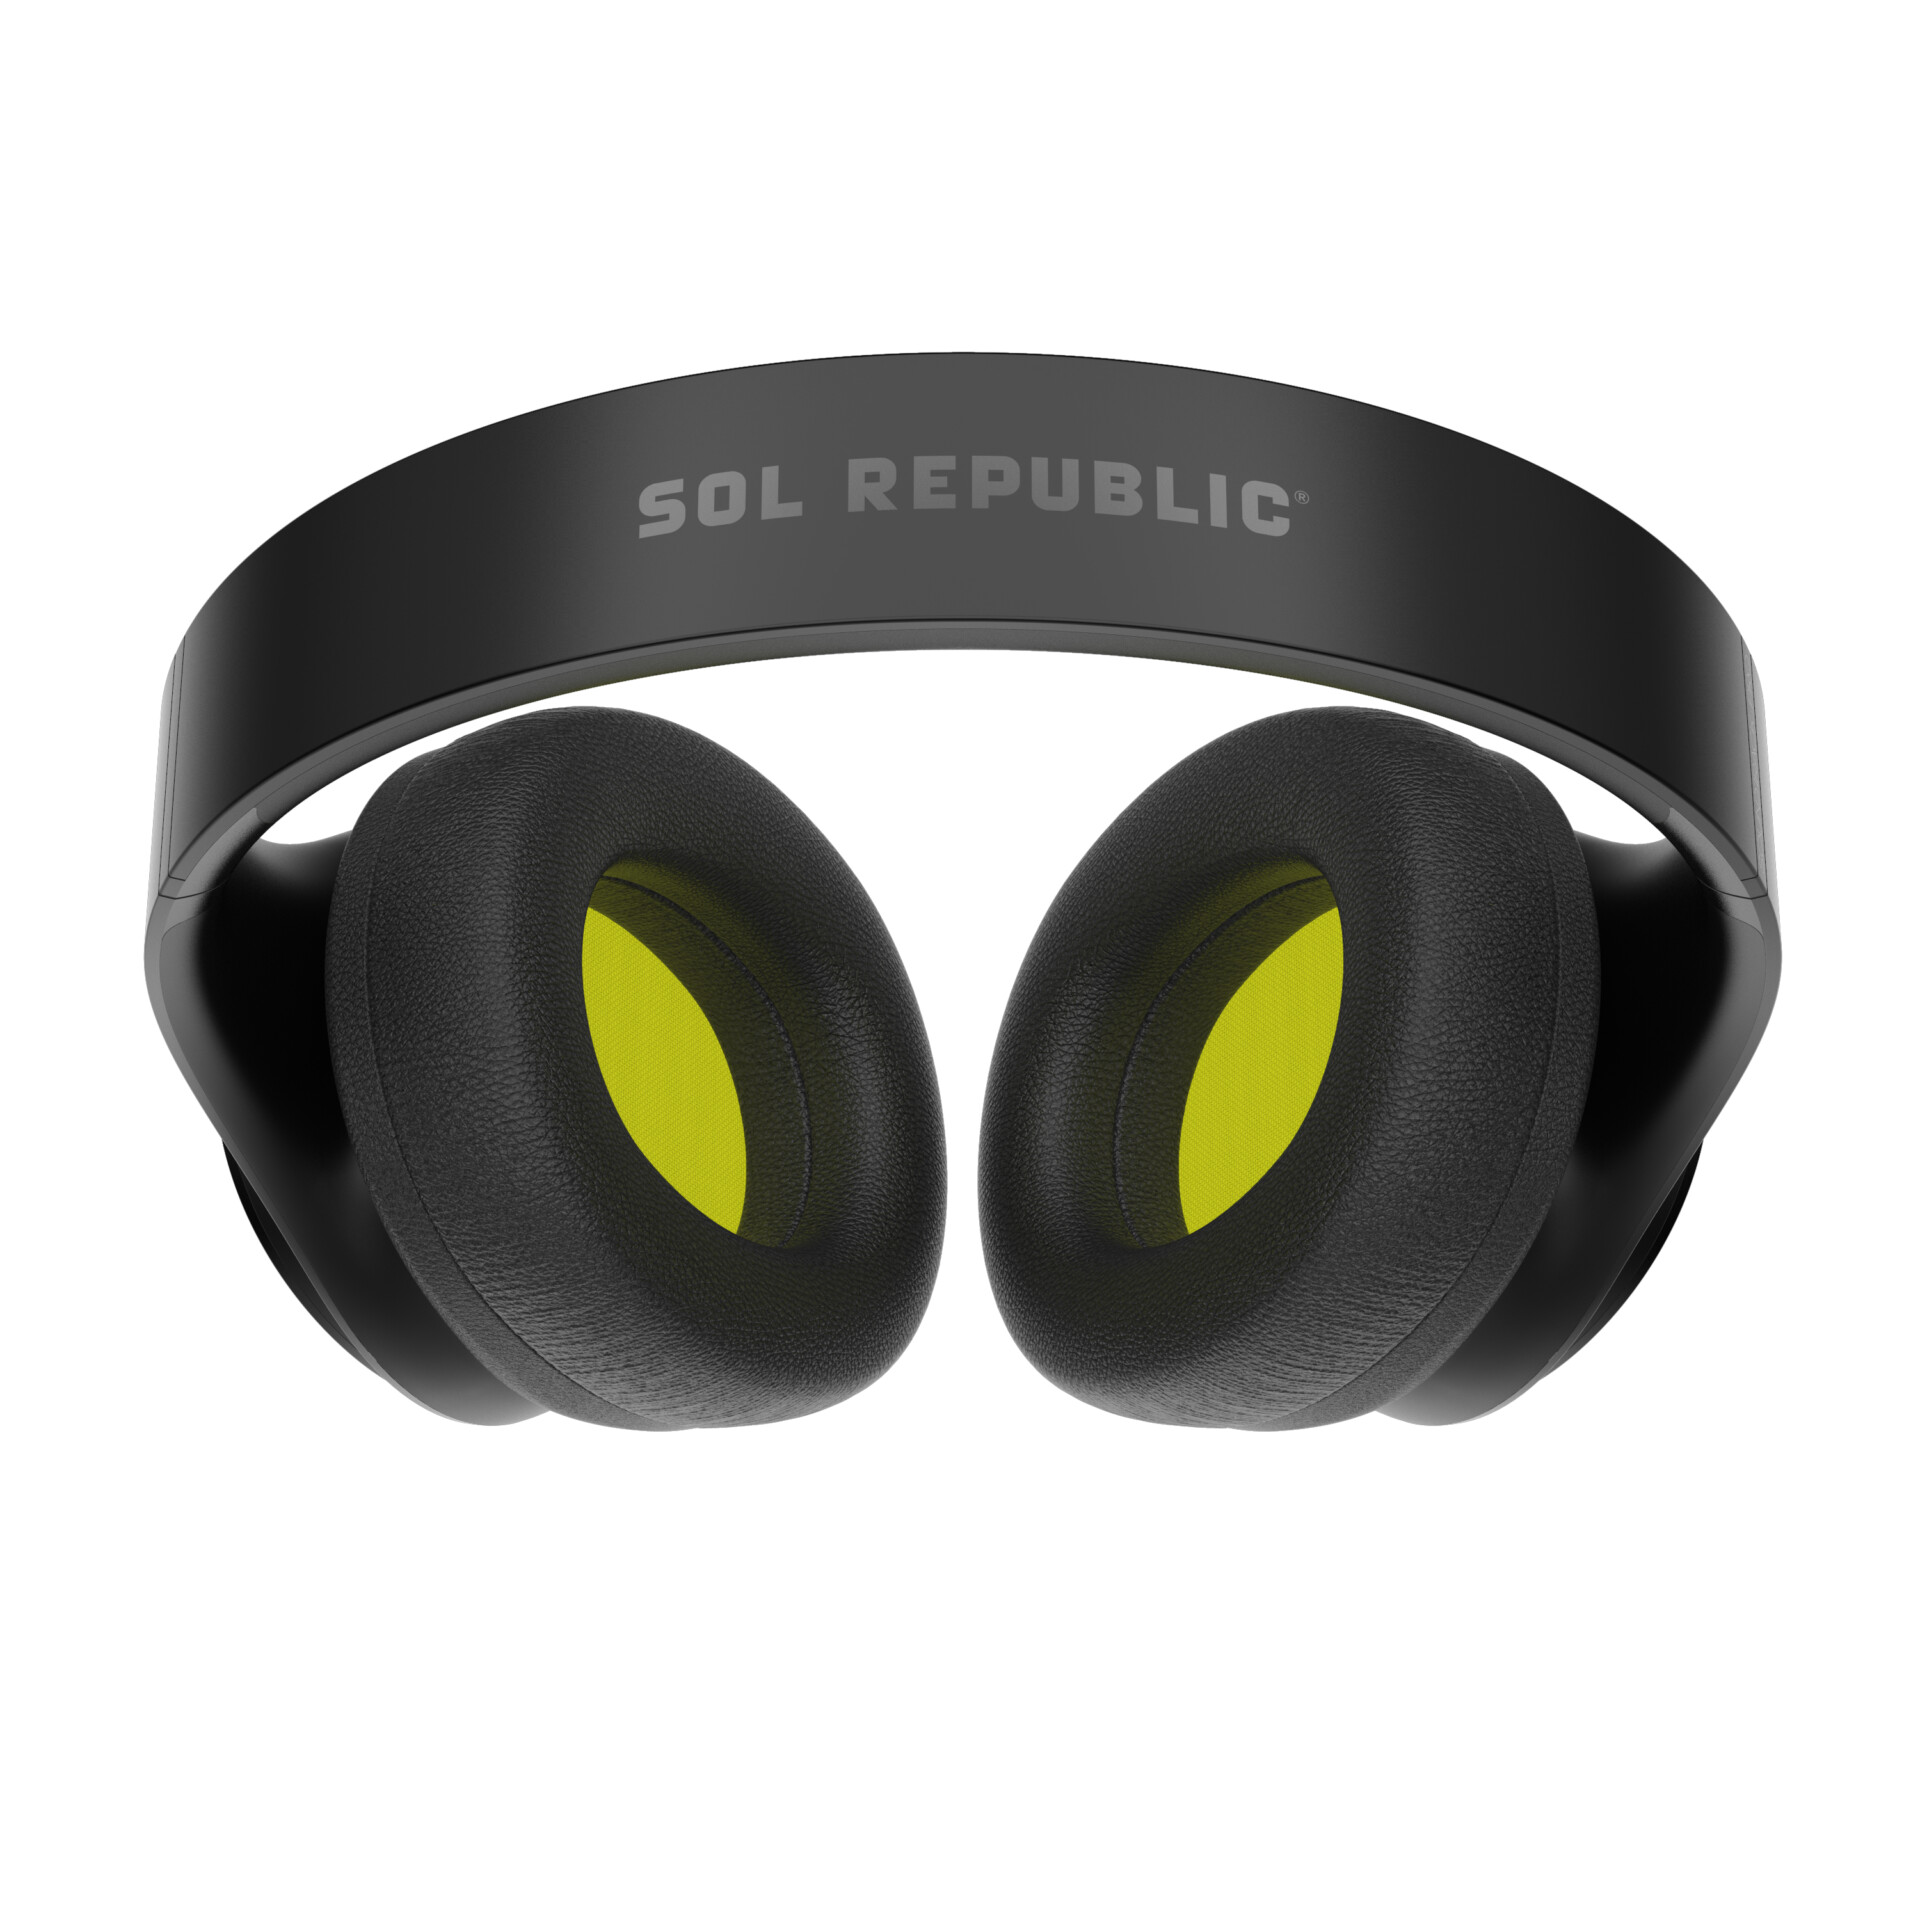 Sol Republic Soundtrack Pro headphones top-down image on white background.